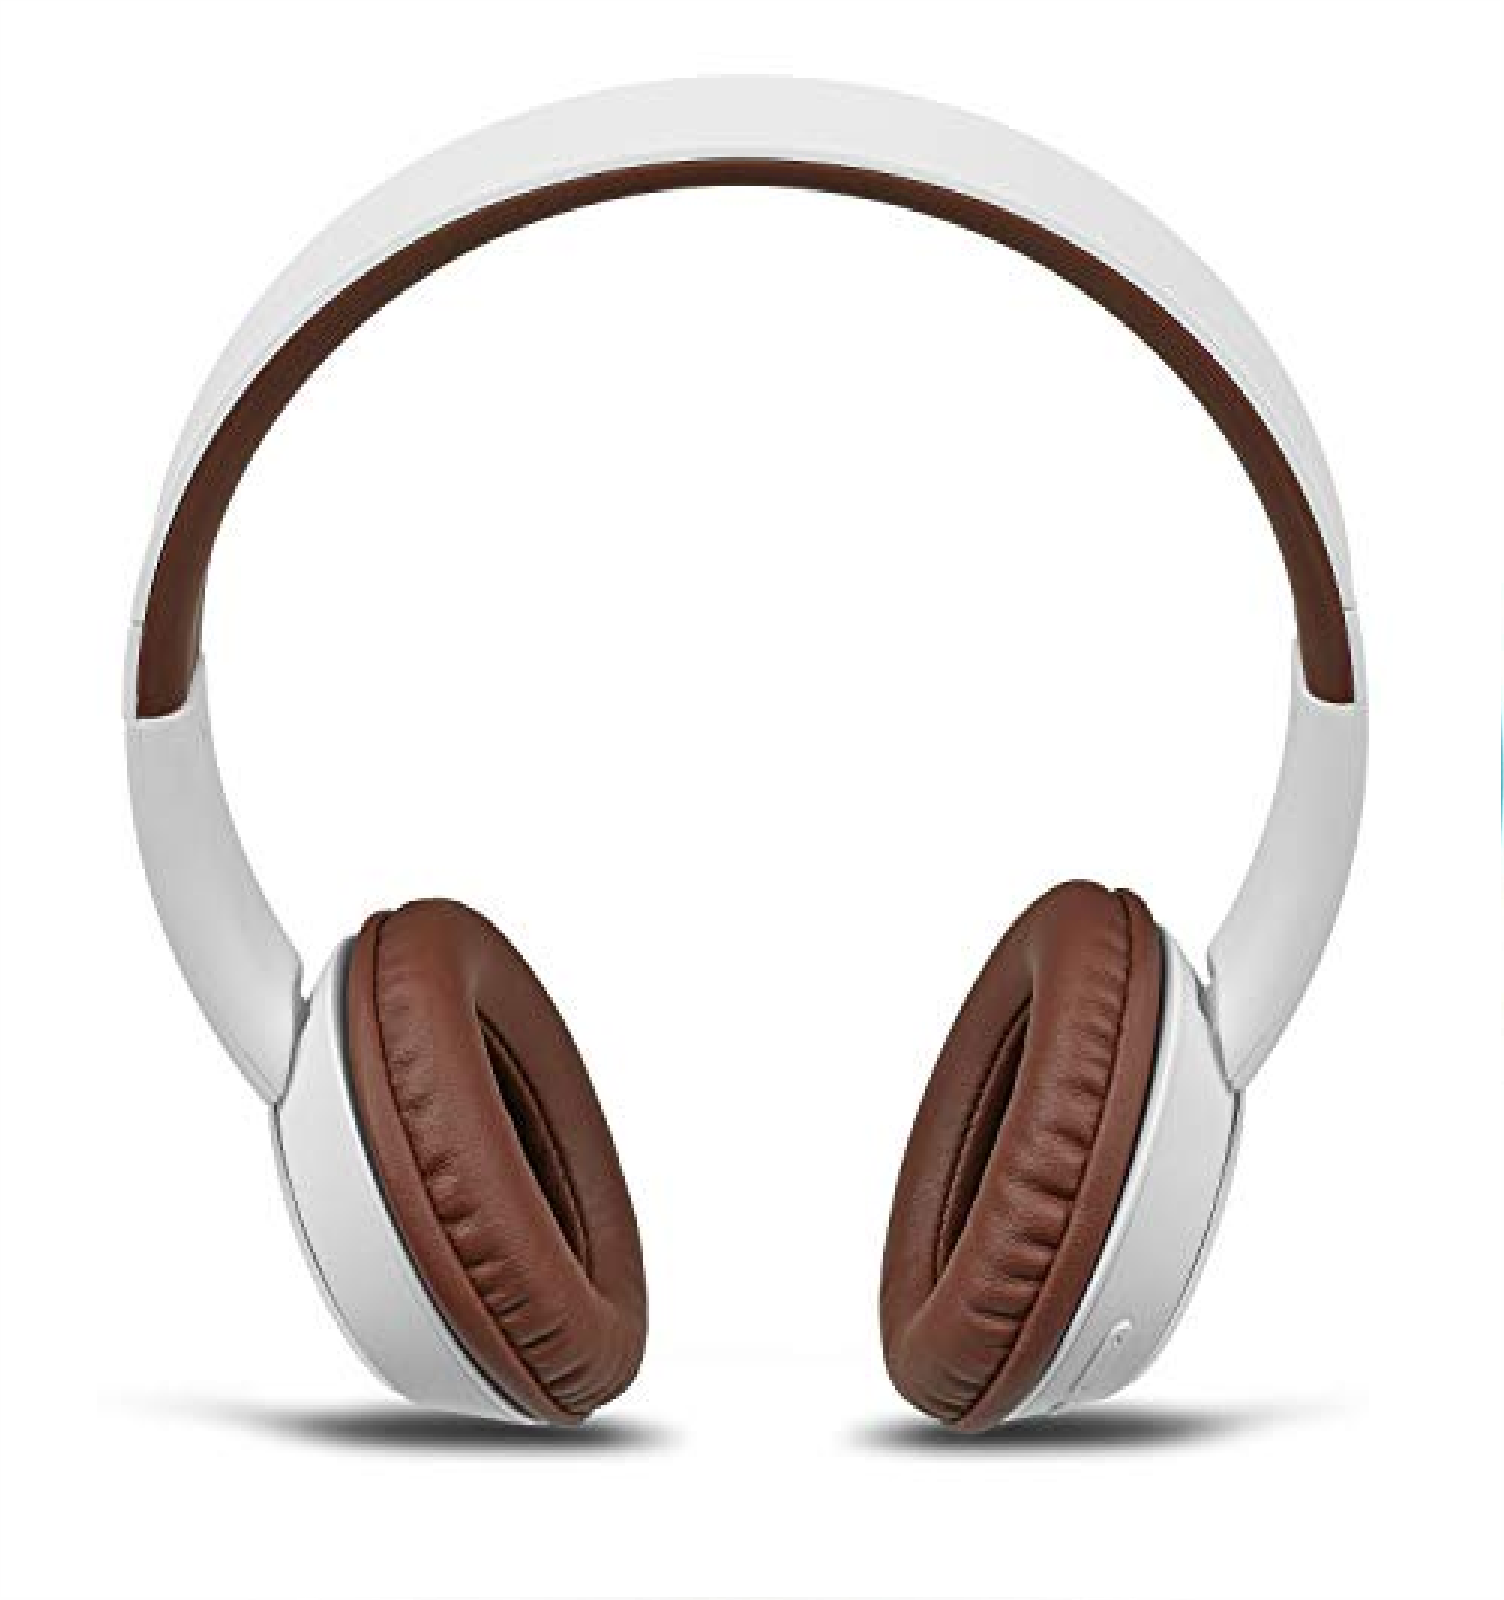 Kopfhörer (kabellos, Freisprechfunktion, 10 Stunden Akkulaufzeit, gepolsterte Ohrmuschel, 3 MEDION E62380 Bluetooth Over Ear